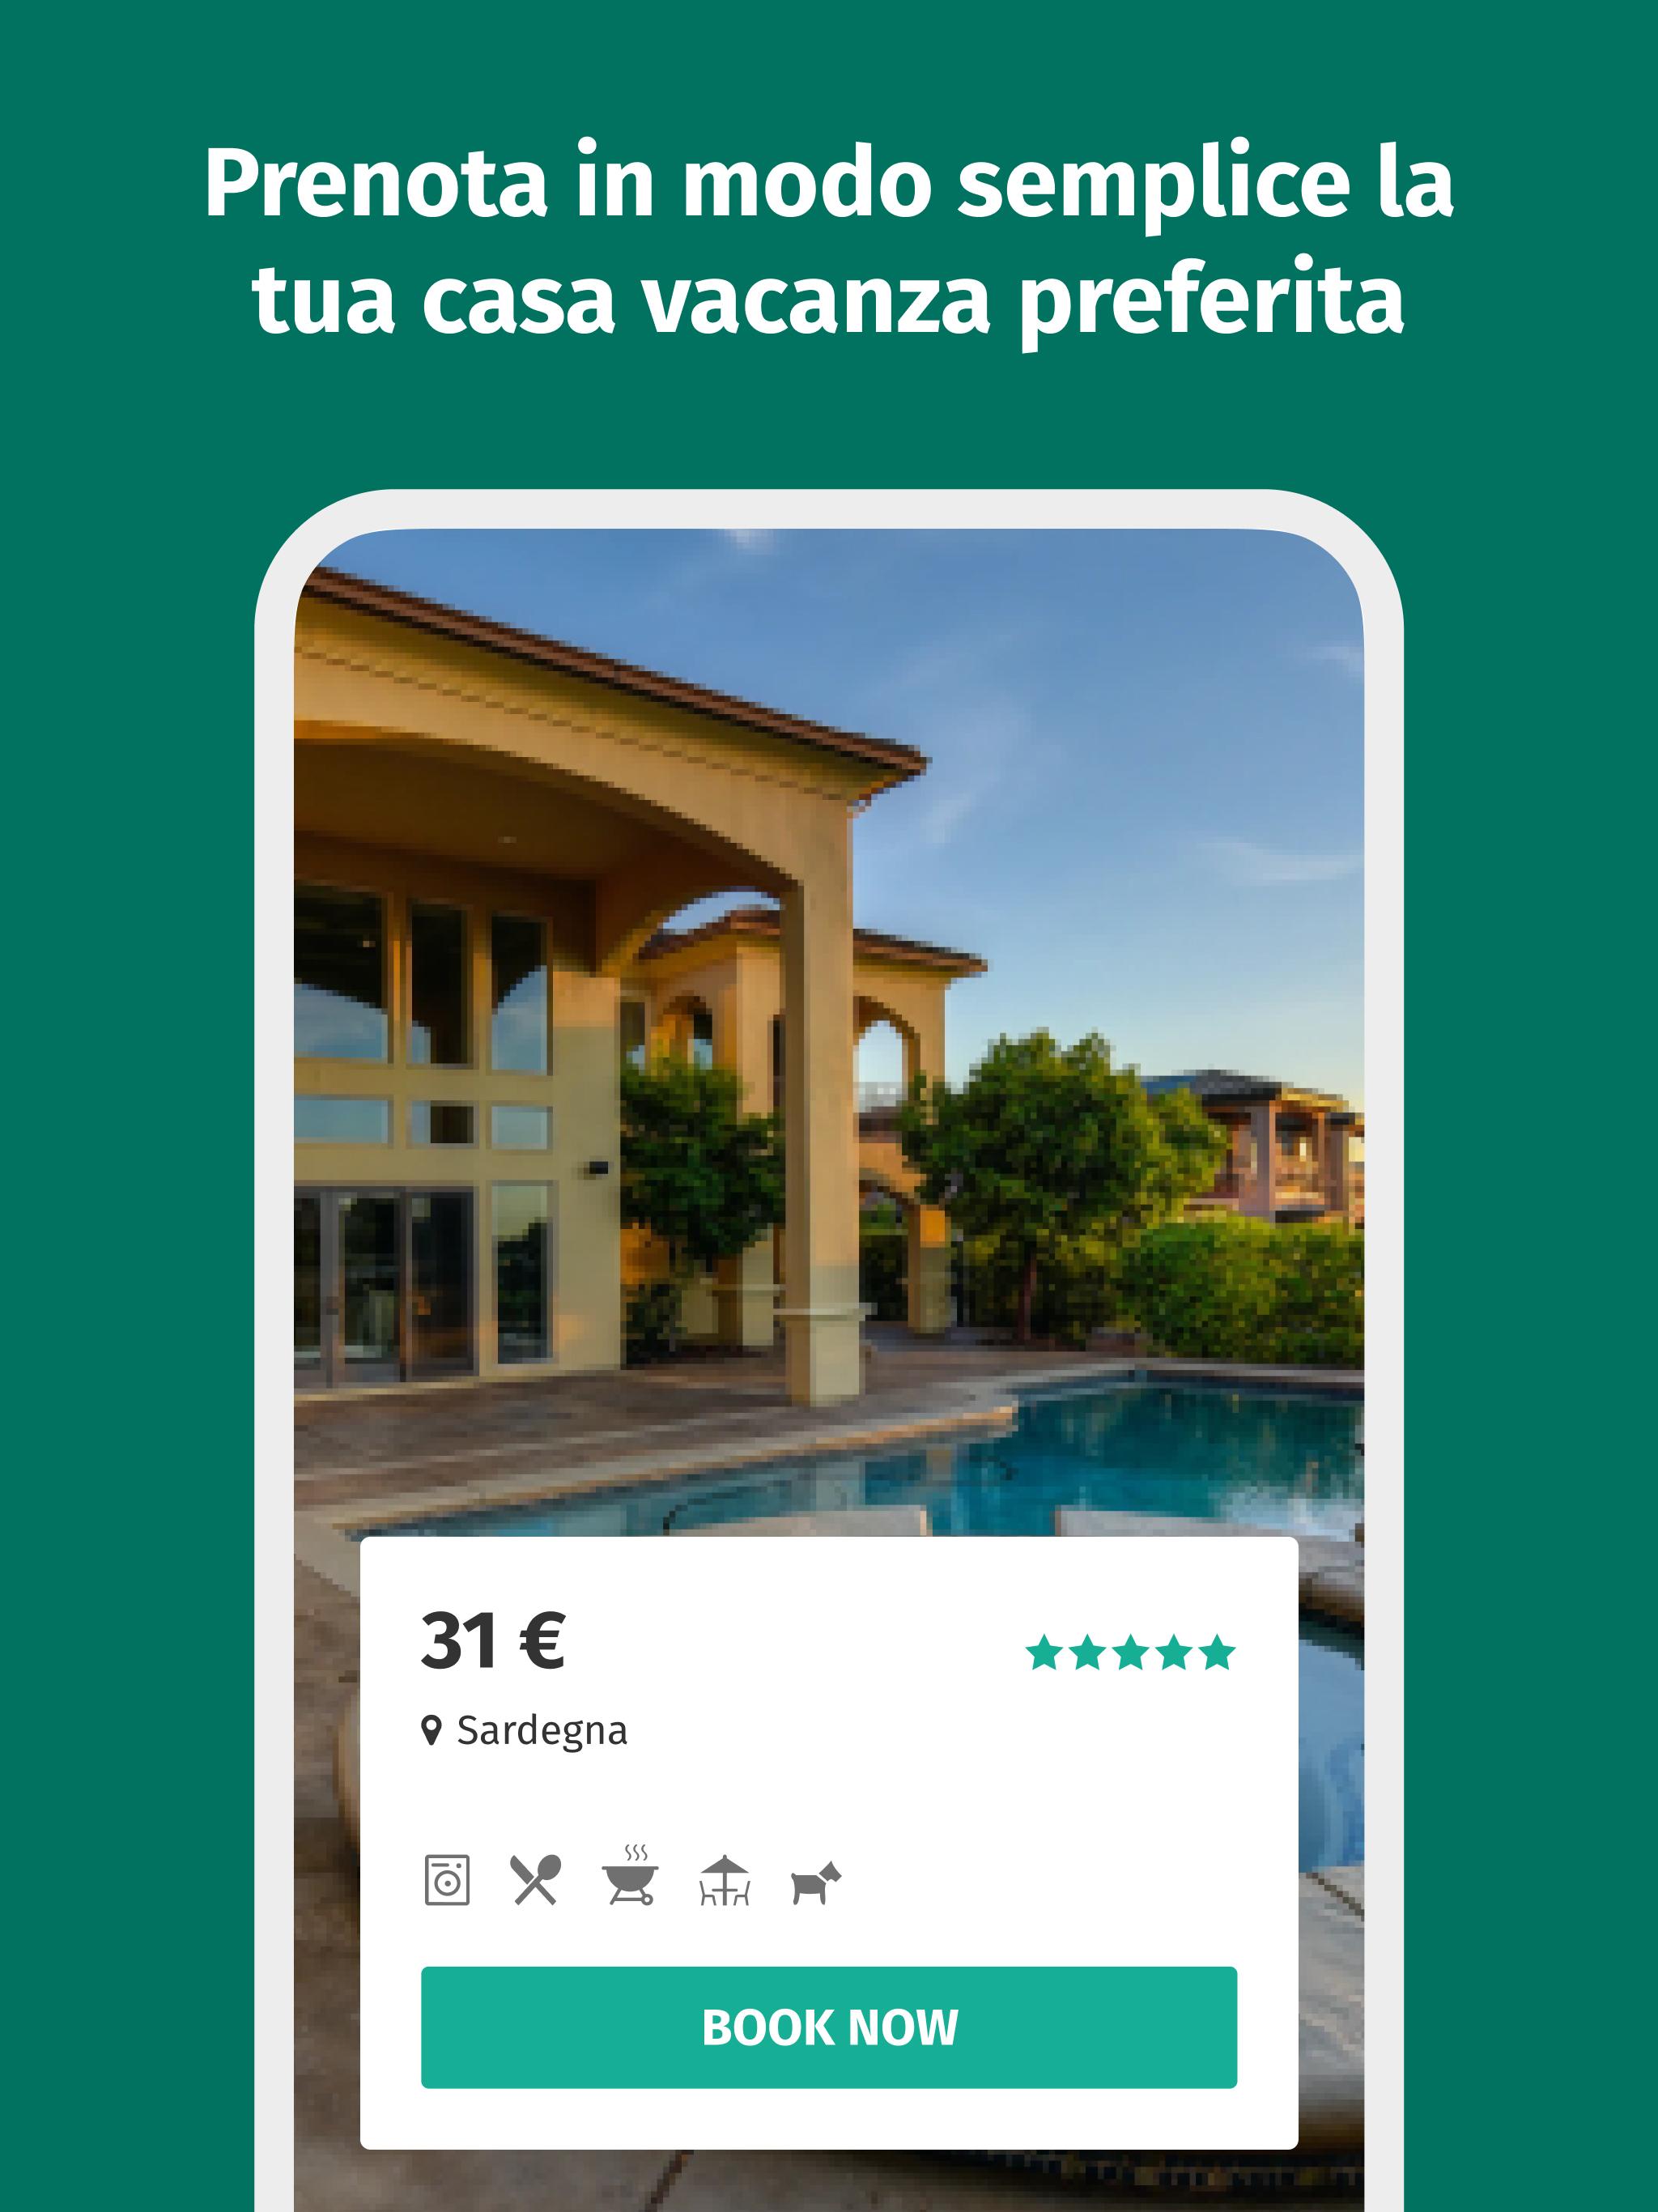 CaseVacanza.it Cerca case vacanza in affitto 1.2.0 Screenshot 18